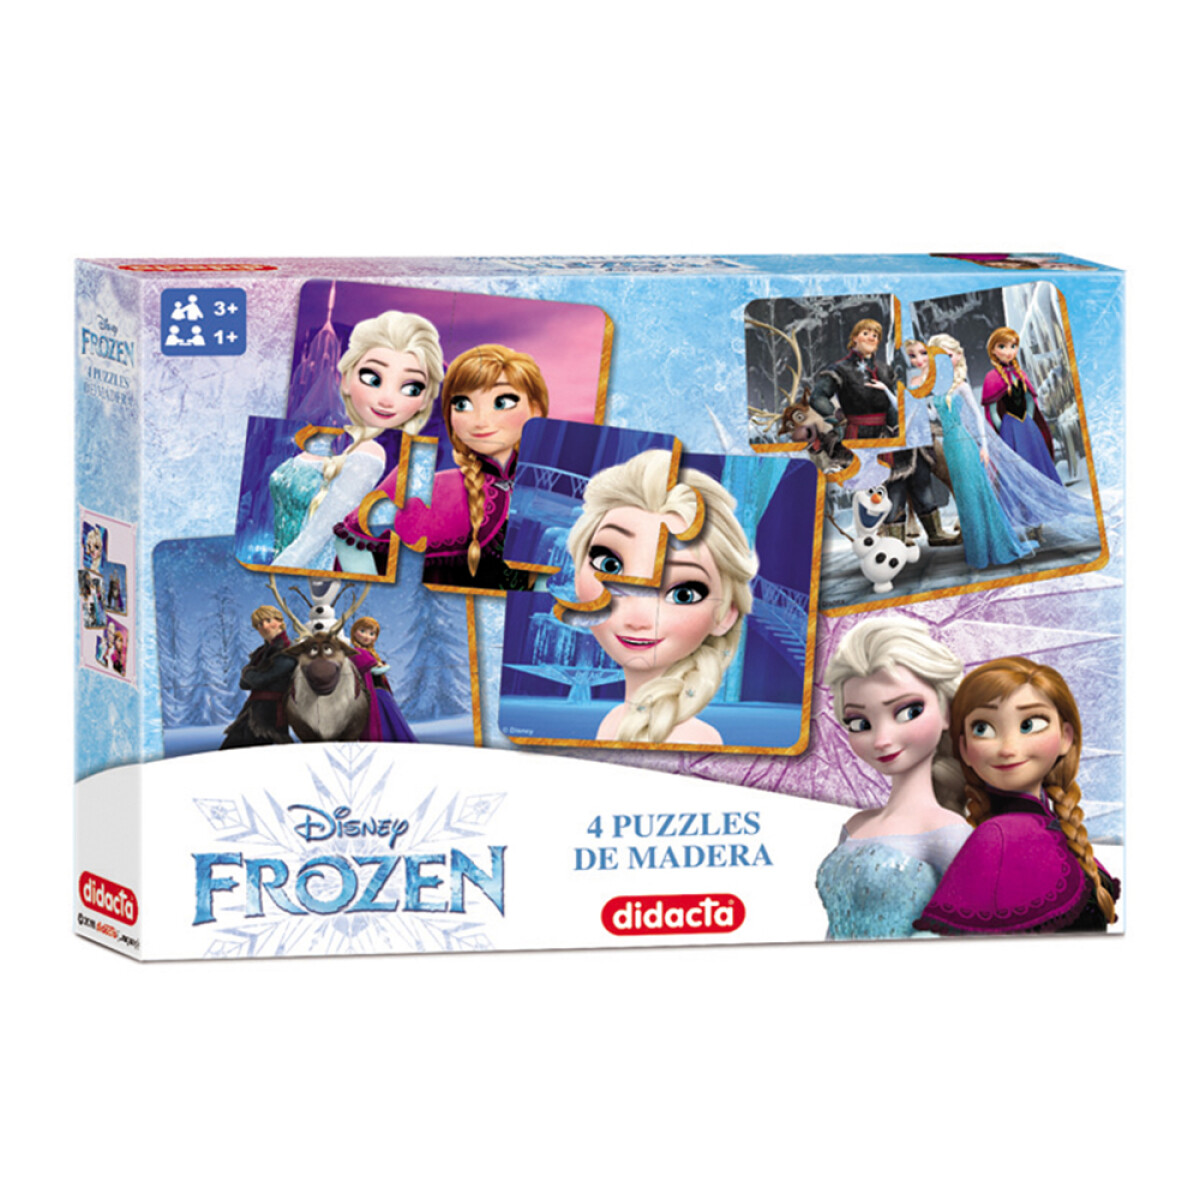 Frozen - 4 Puzzles en Madera 